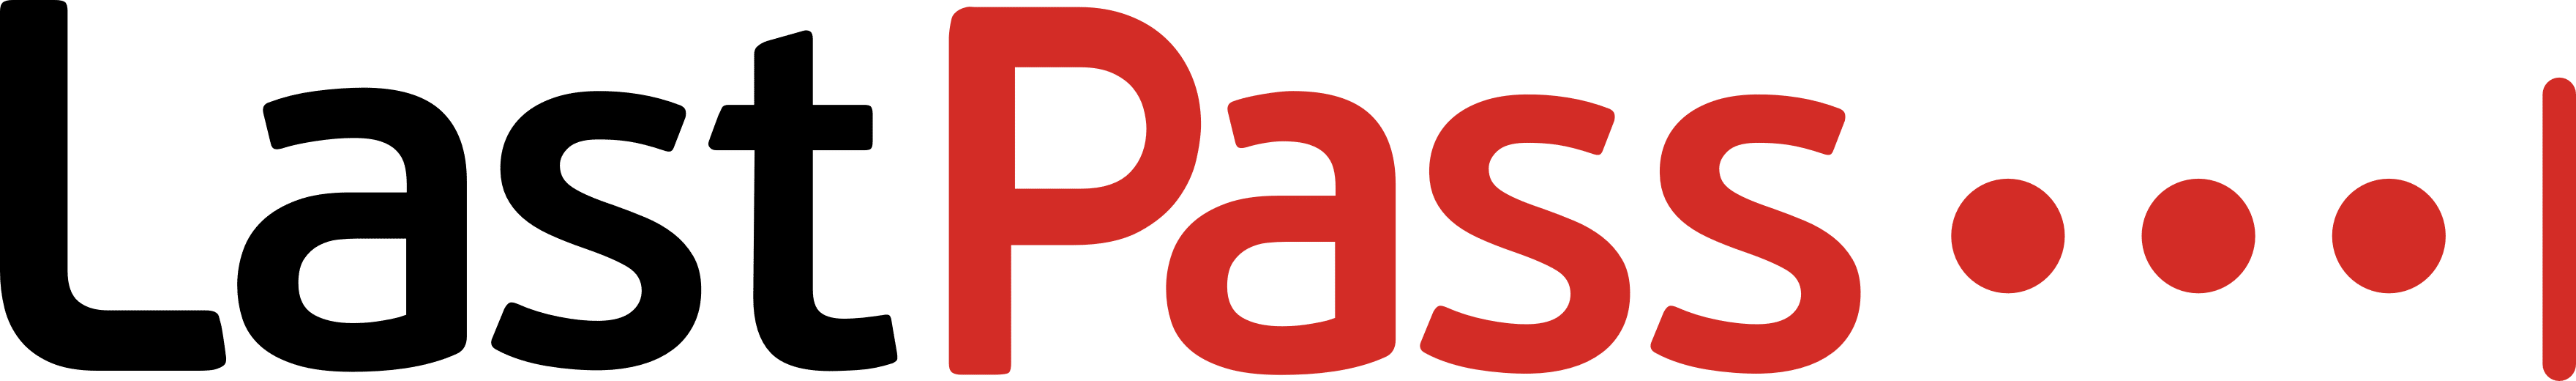 Lastpass-logo